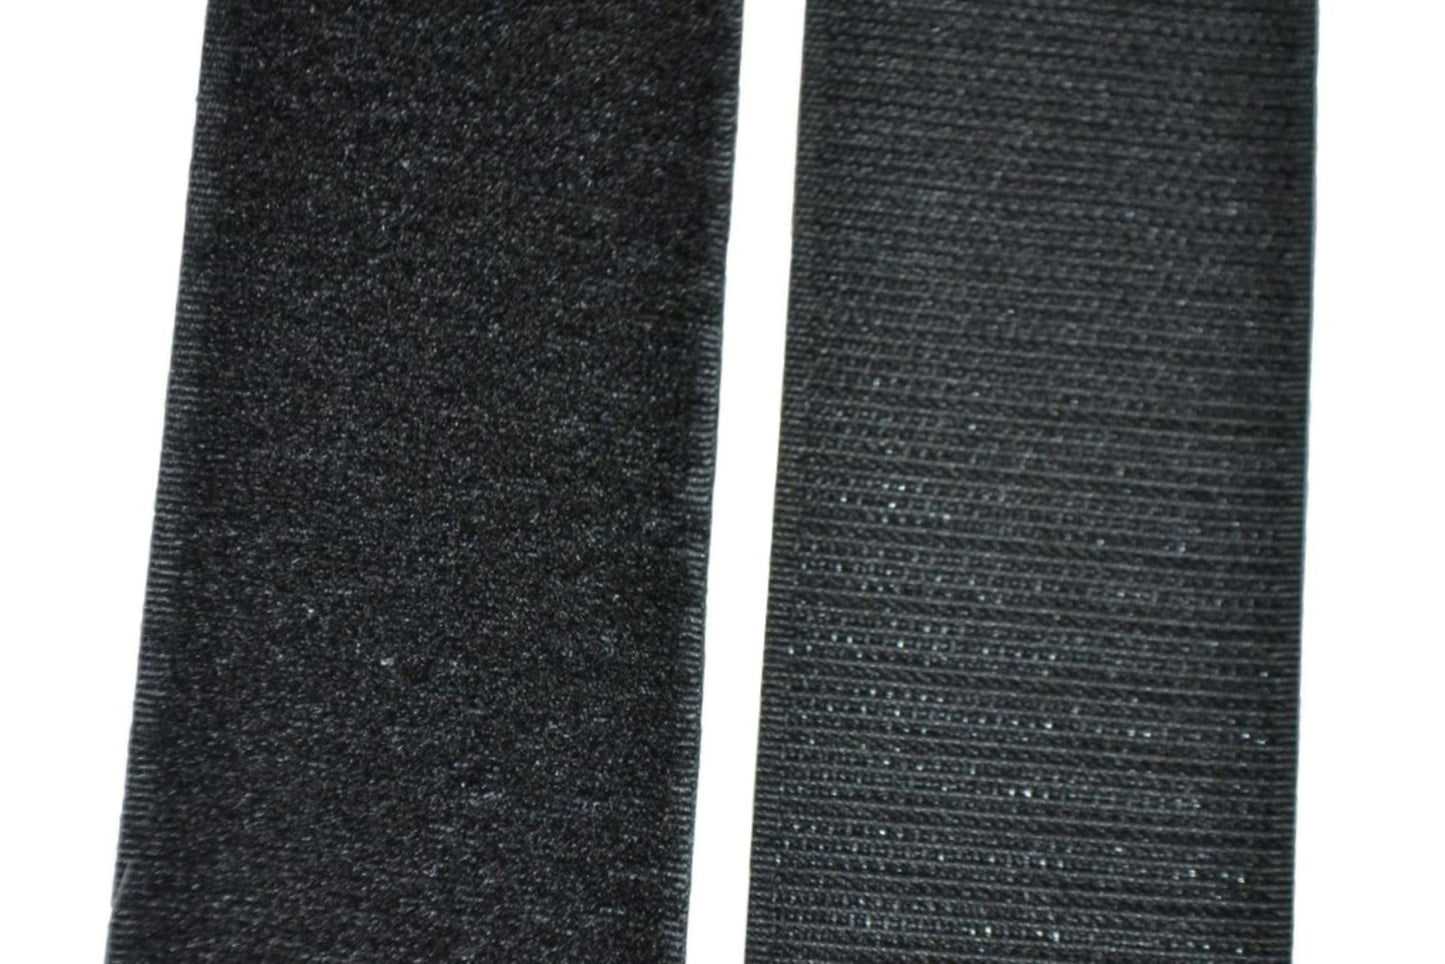 1", 1.5", 2", 3" & 4" Black Sew on (Hook and Loop Tape Set) Nylon Fabric Non-Adhesive Fastener Interlocking Tape